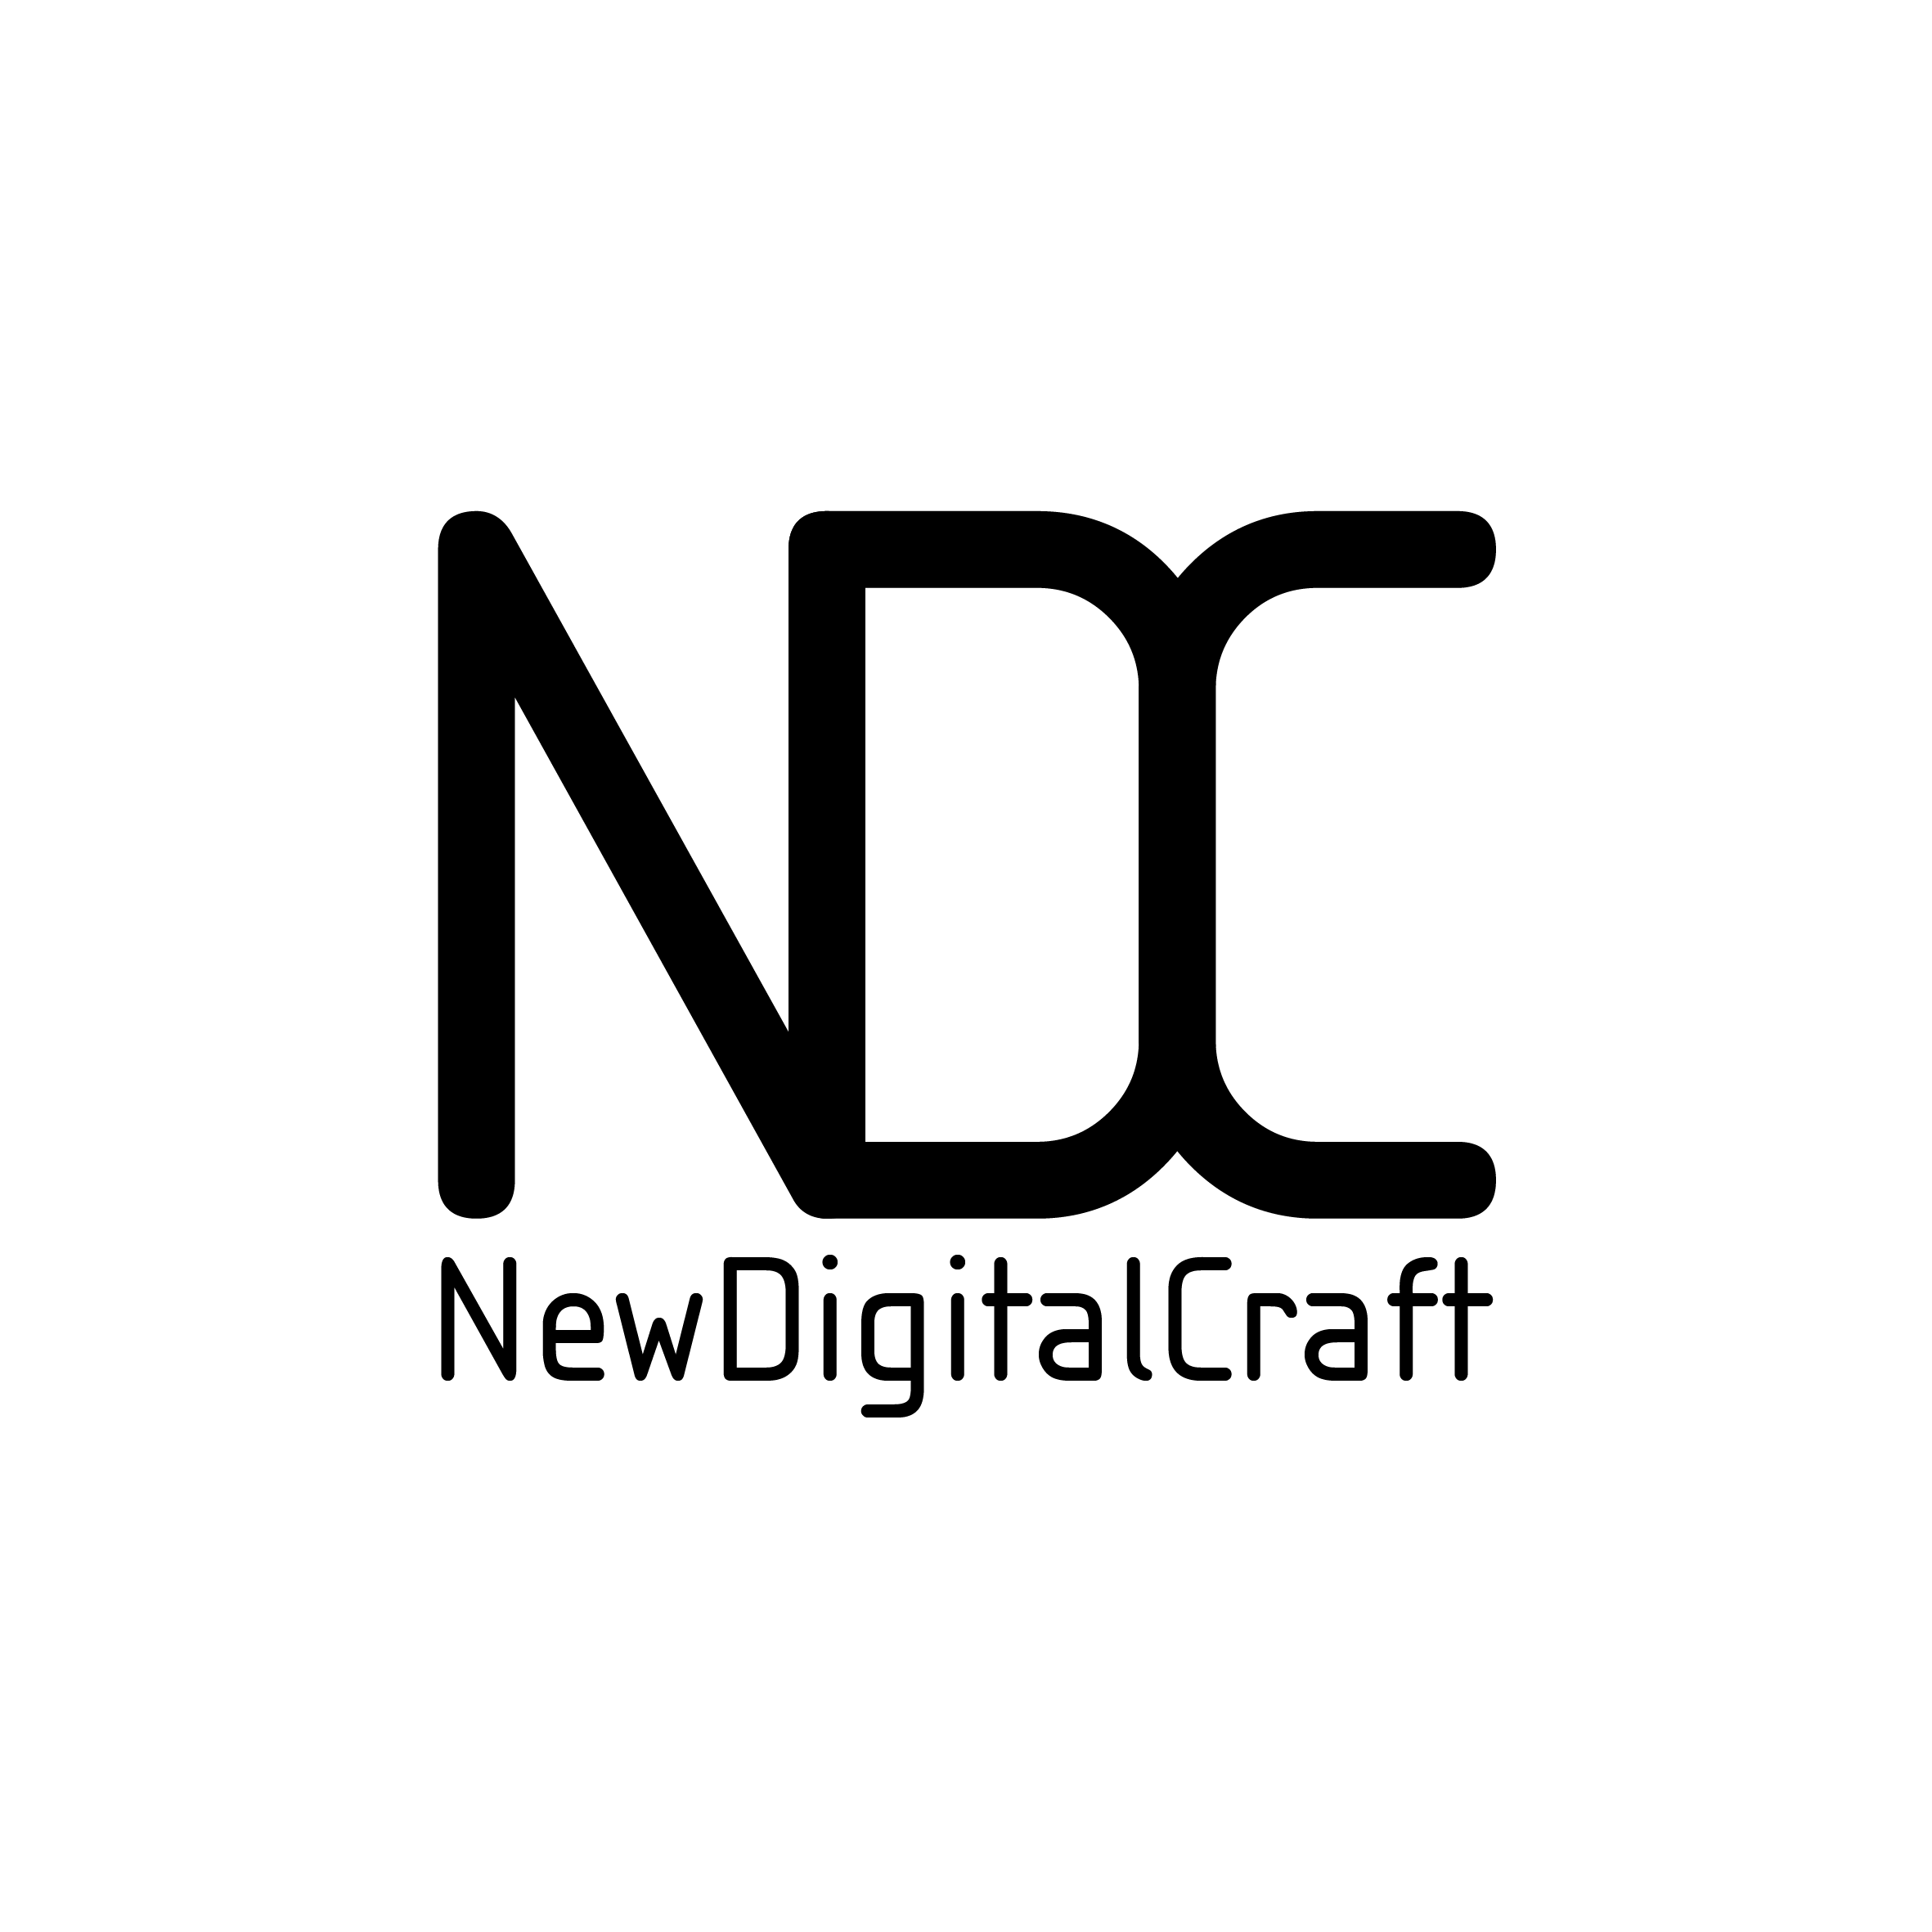 Our Work - Digital Craft PDX